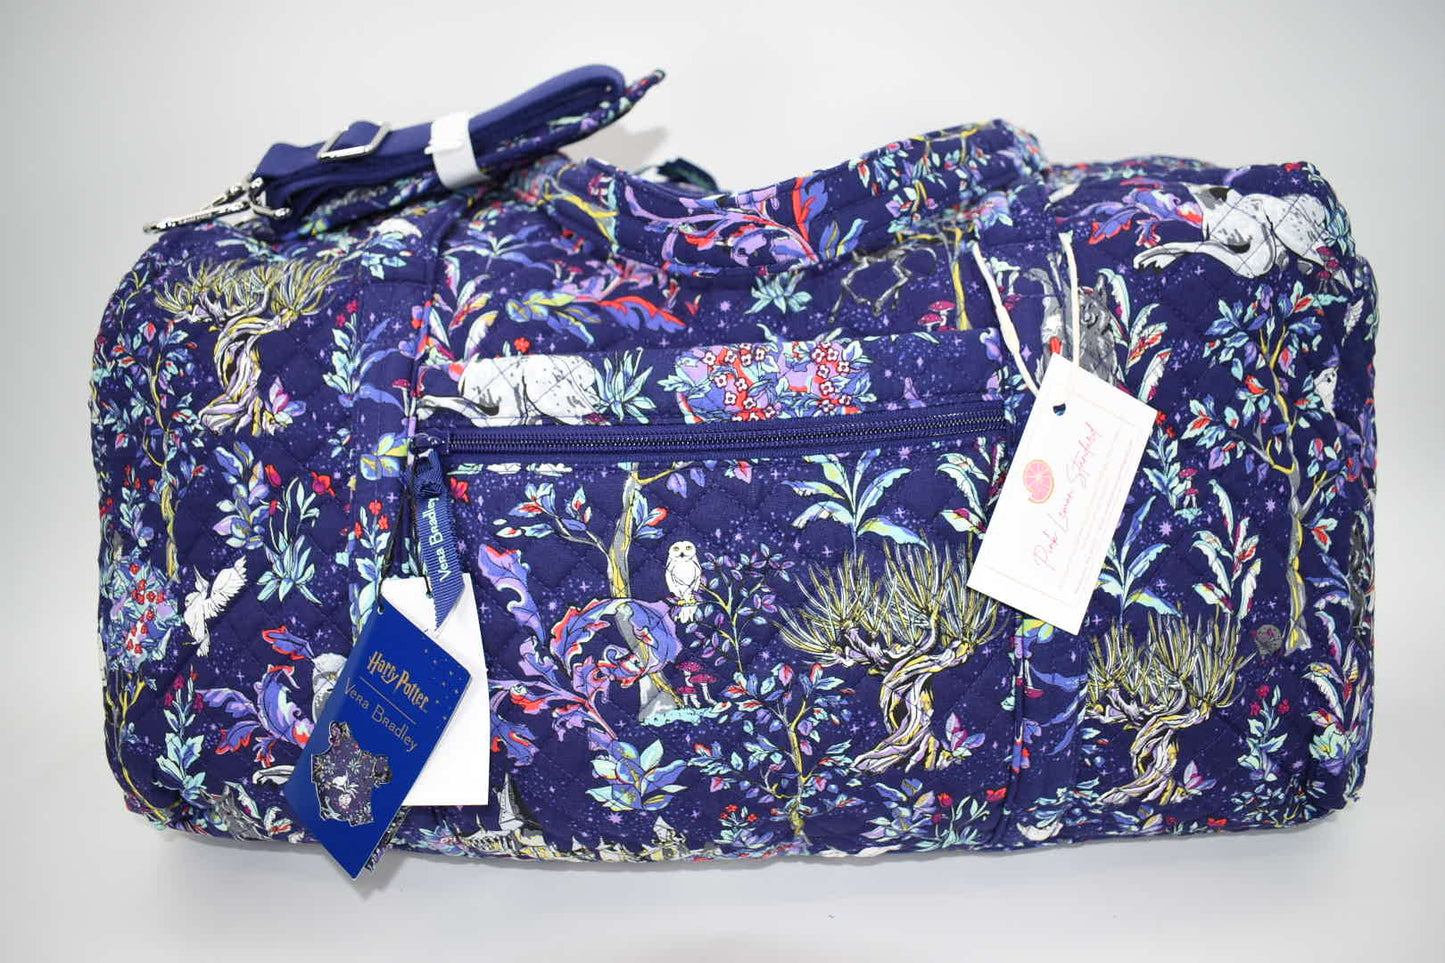 Vera Bradley Harry Potter™ Large Travel Duffel Bag in "Forbidden Forest" Pattern